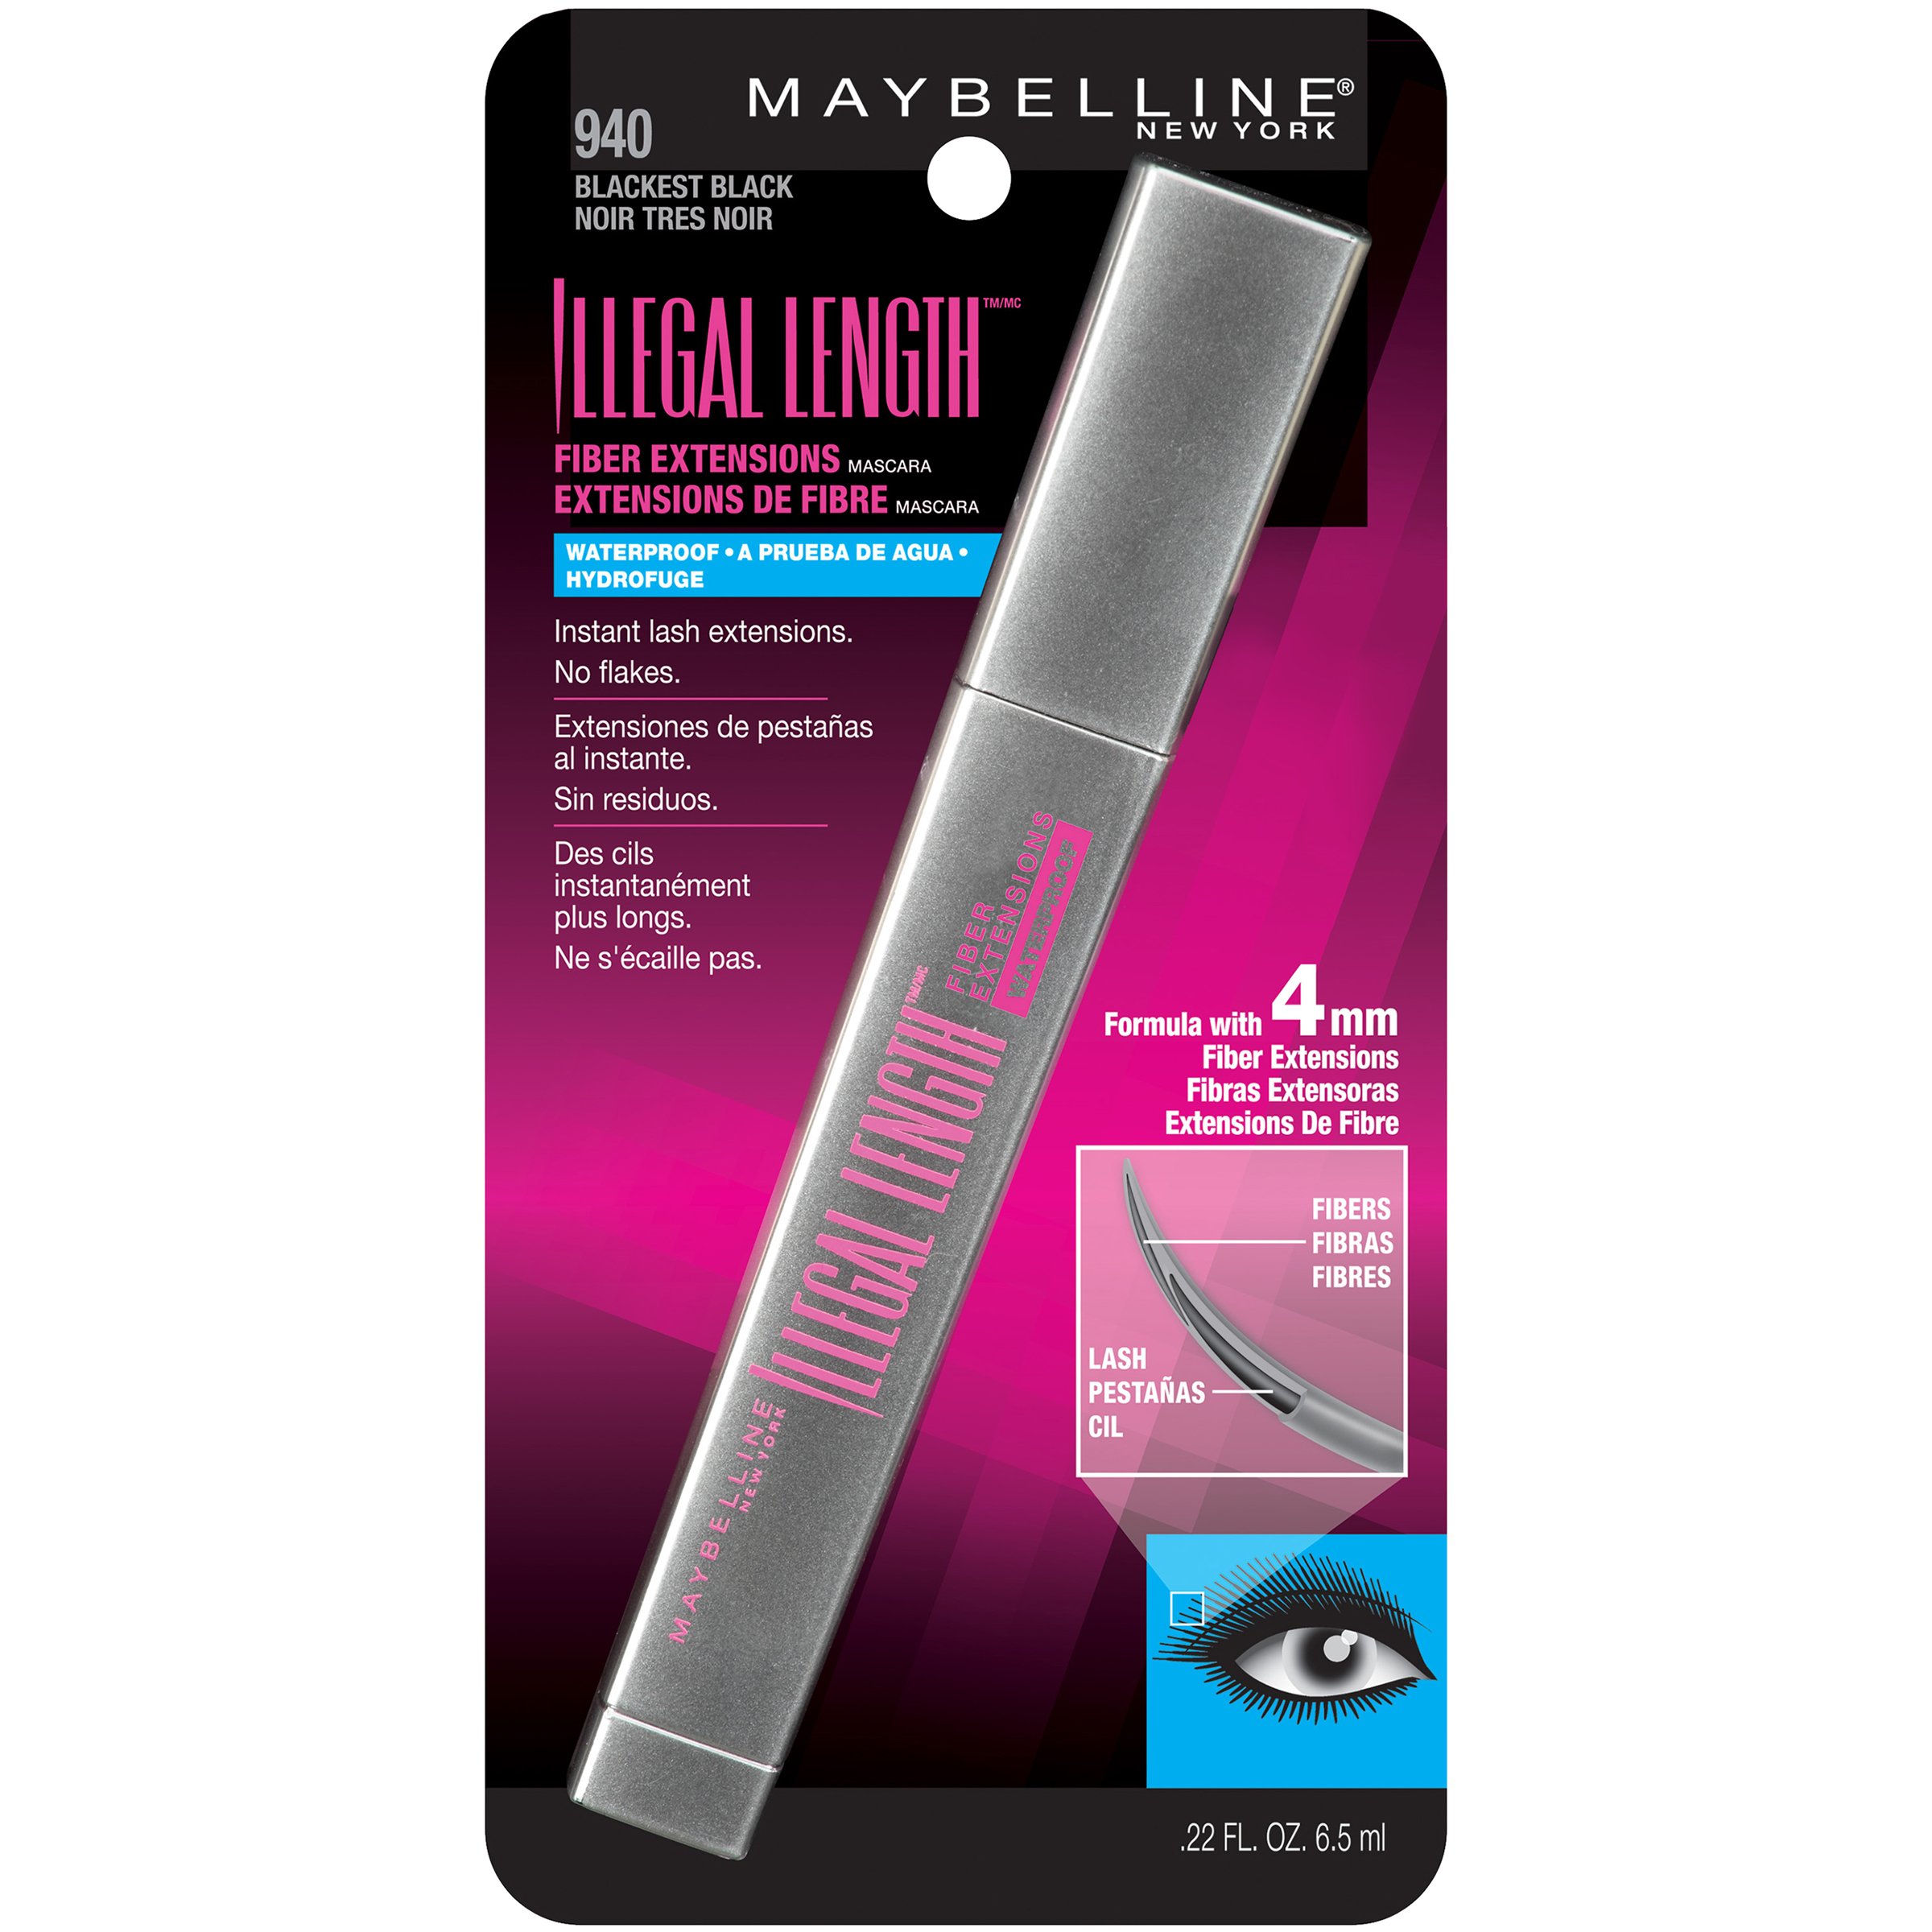 Is Maybelline Illegal Length Mascara Waterproof? 2